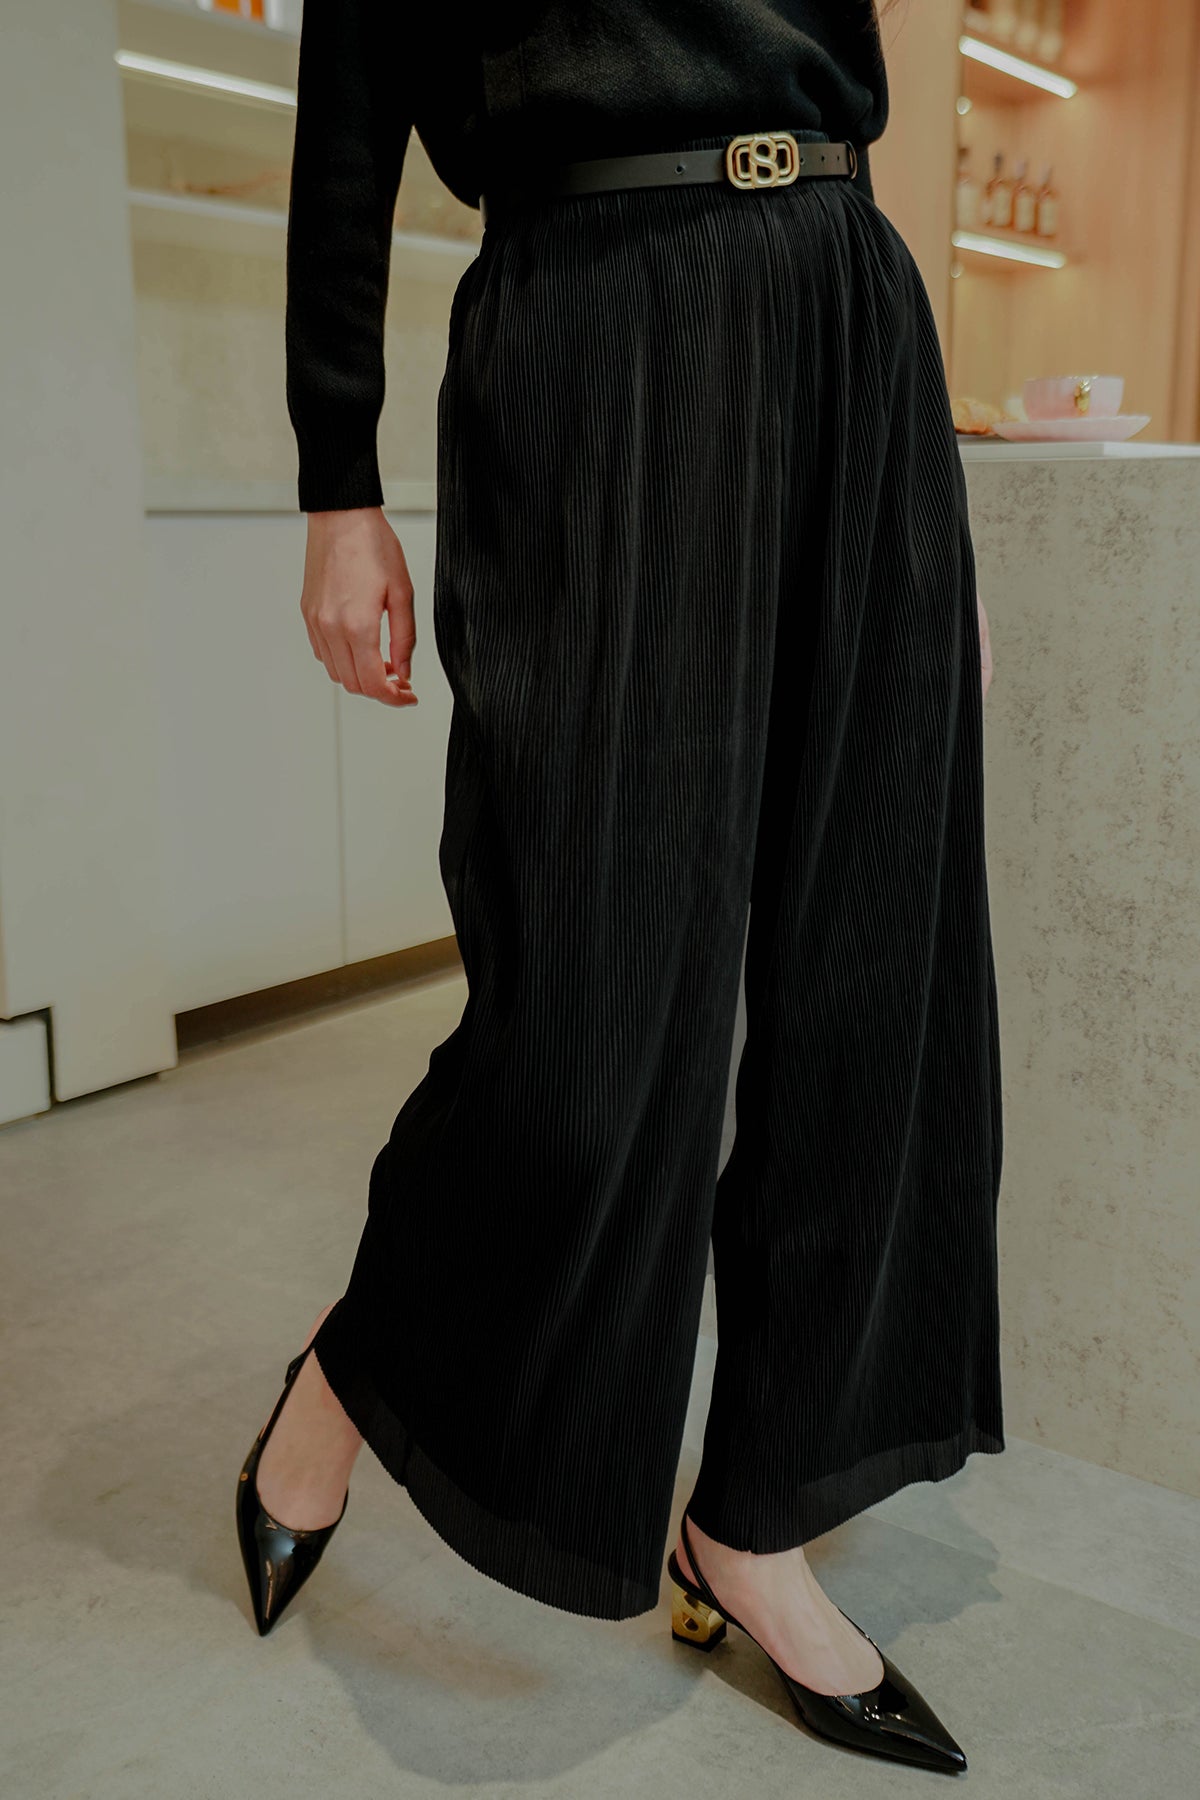 Buy Savane Men's Select Edition Microfiber Pleated Dress Pant, Black, 32x32  at Amazon.in